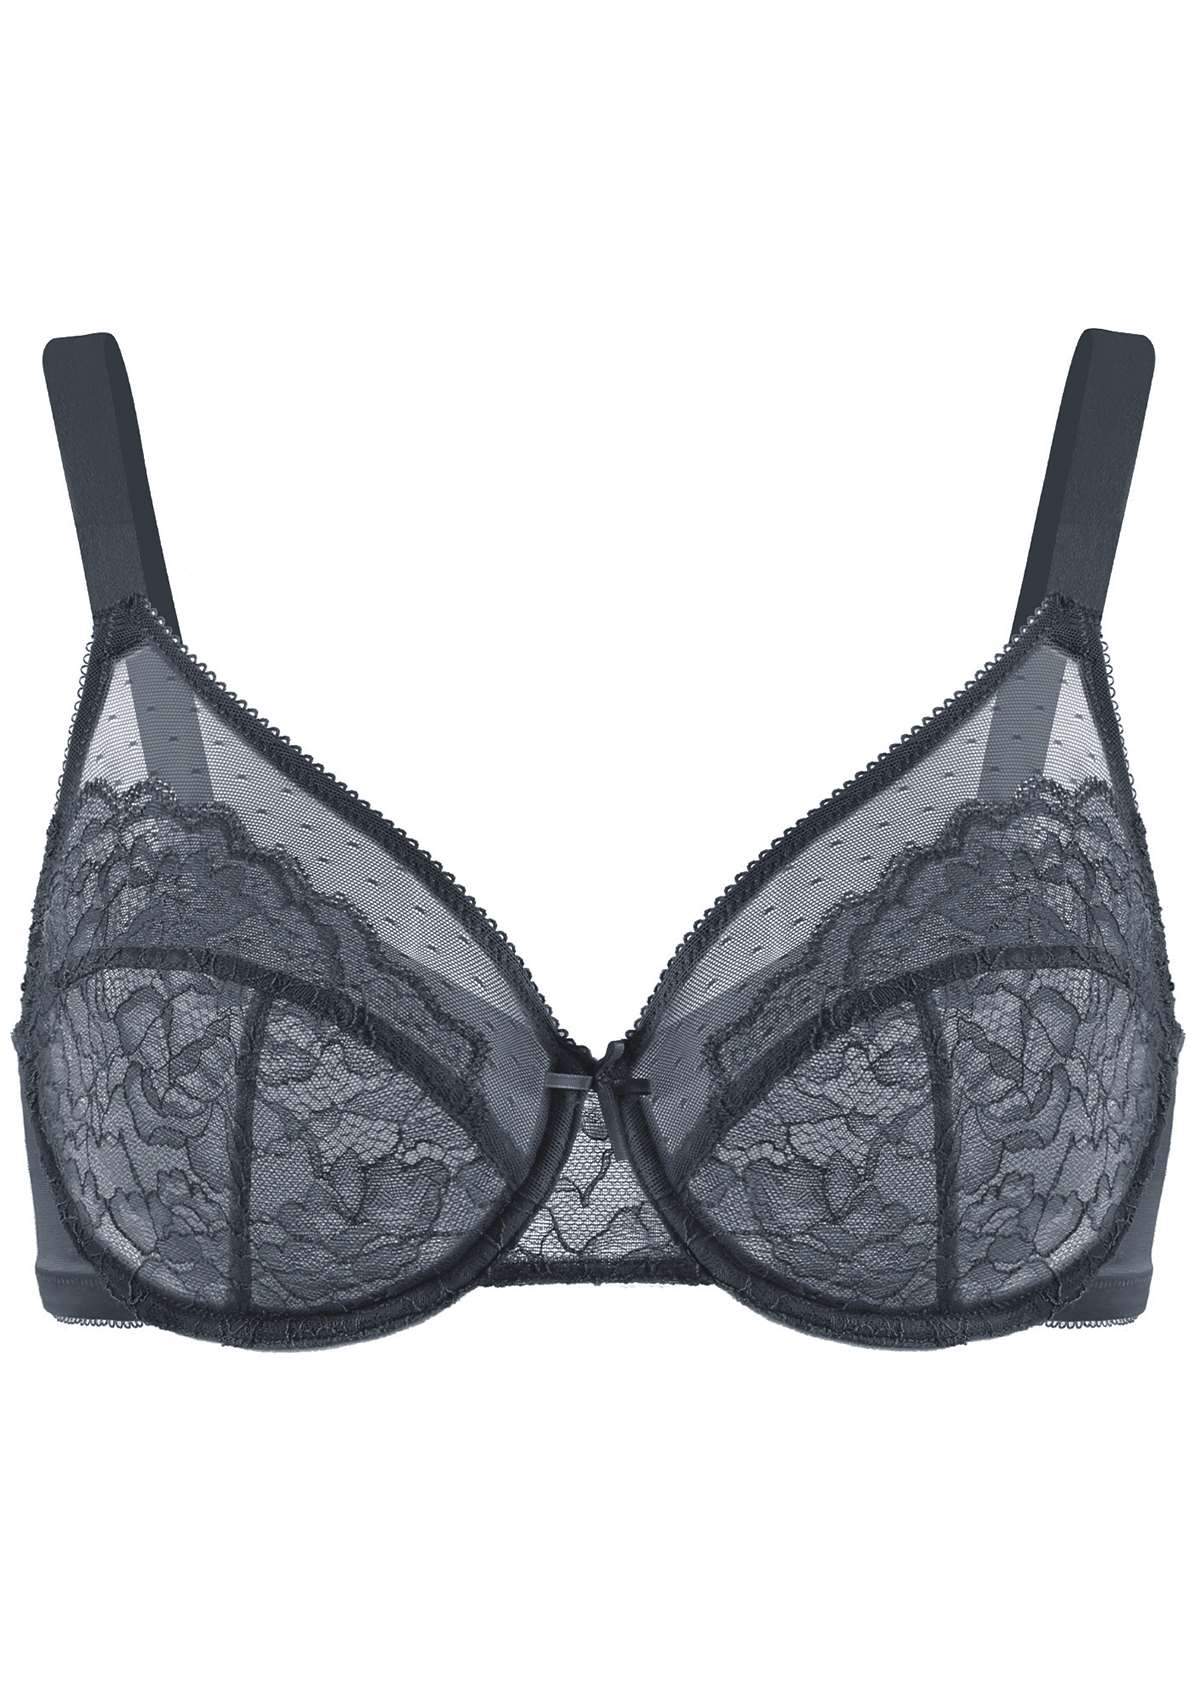 HSIA Enchante Matching Bra And Underwear Sets: Uplift Big Boobs Bra - Dark Gray / 36 / C